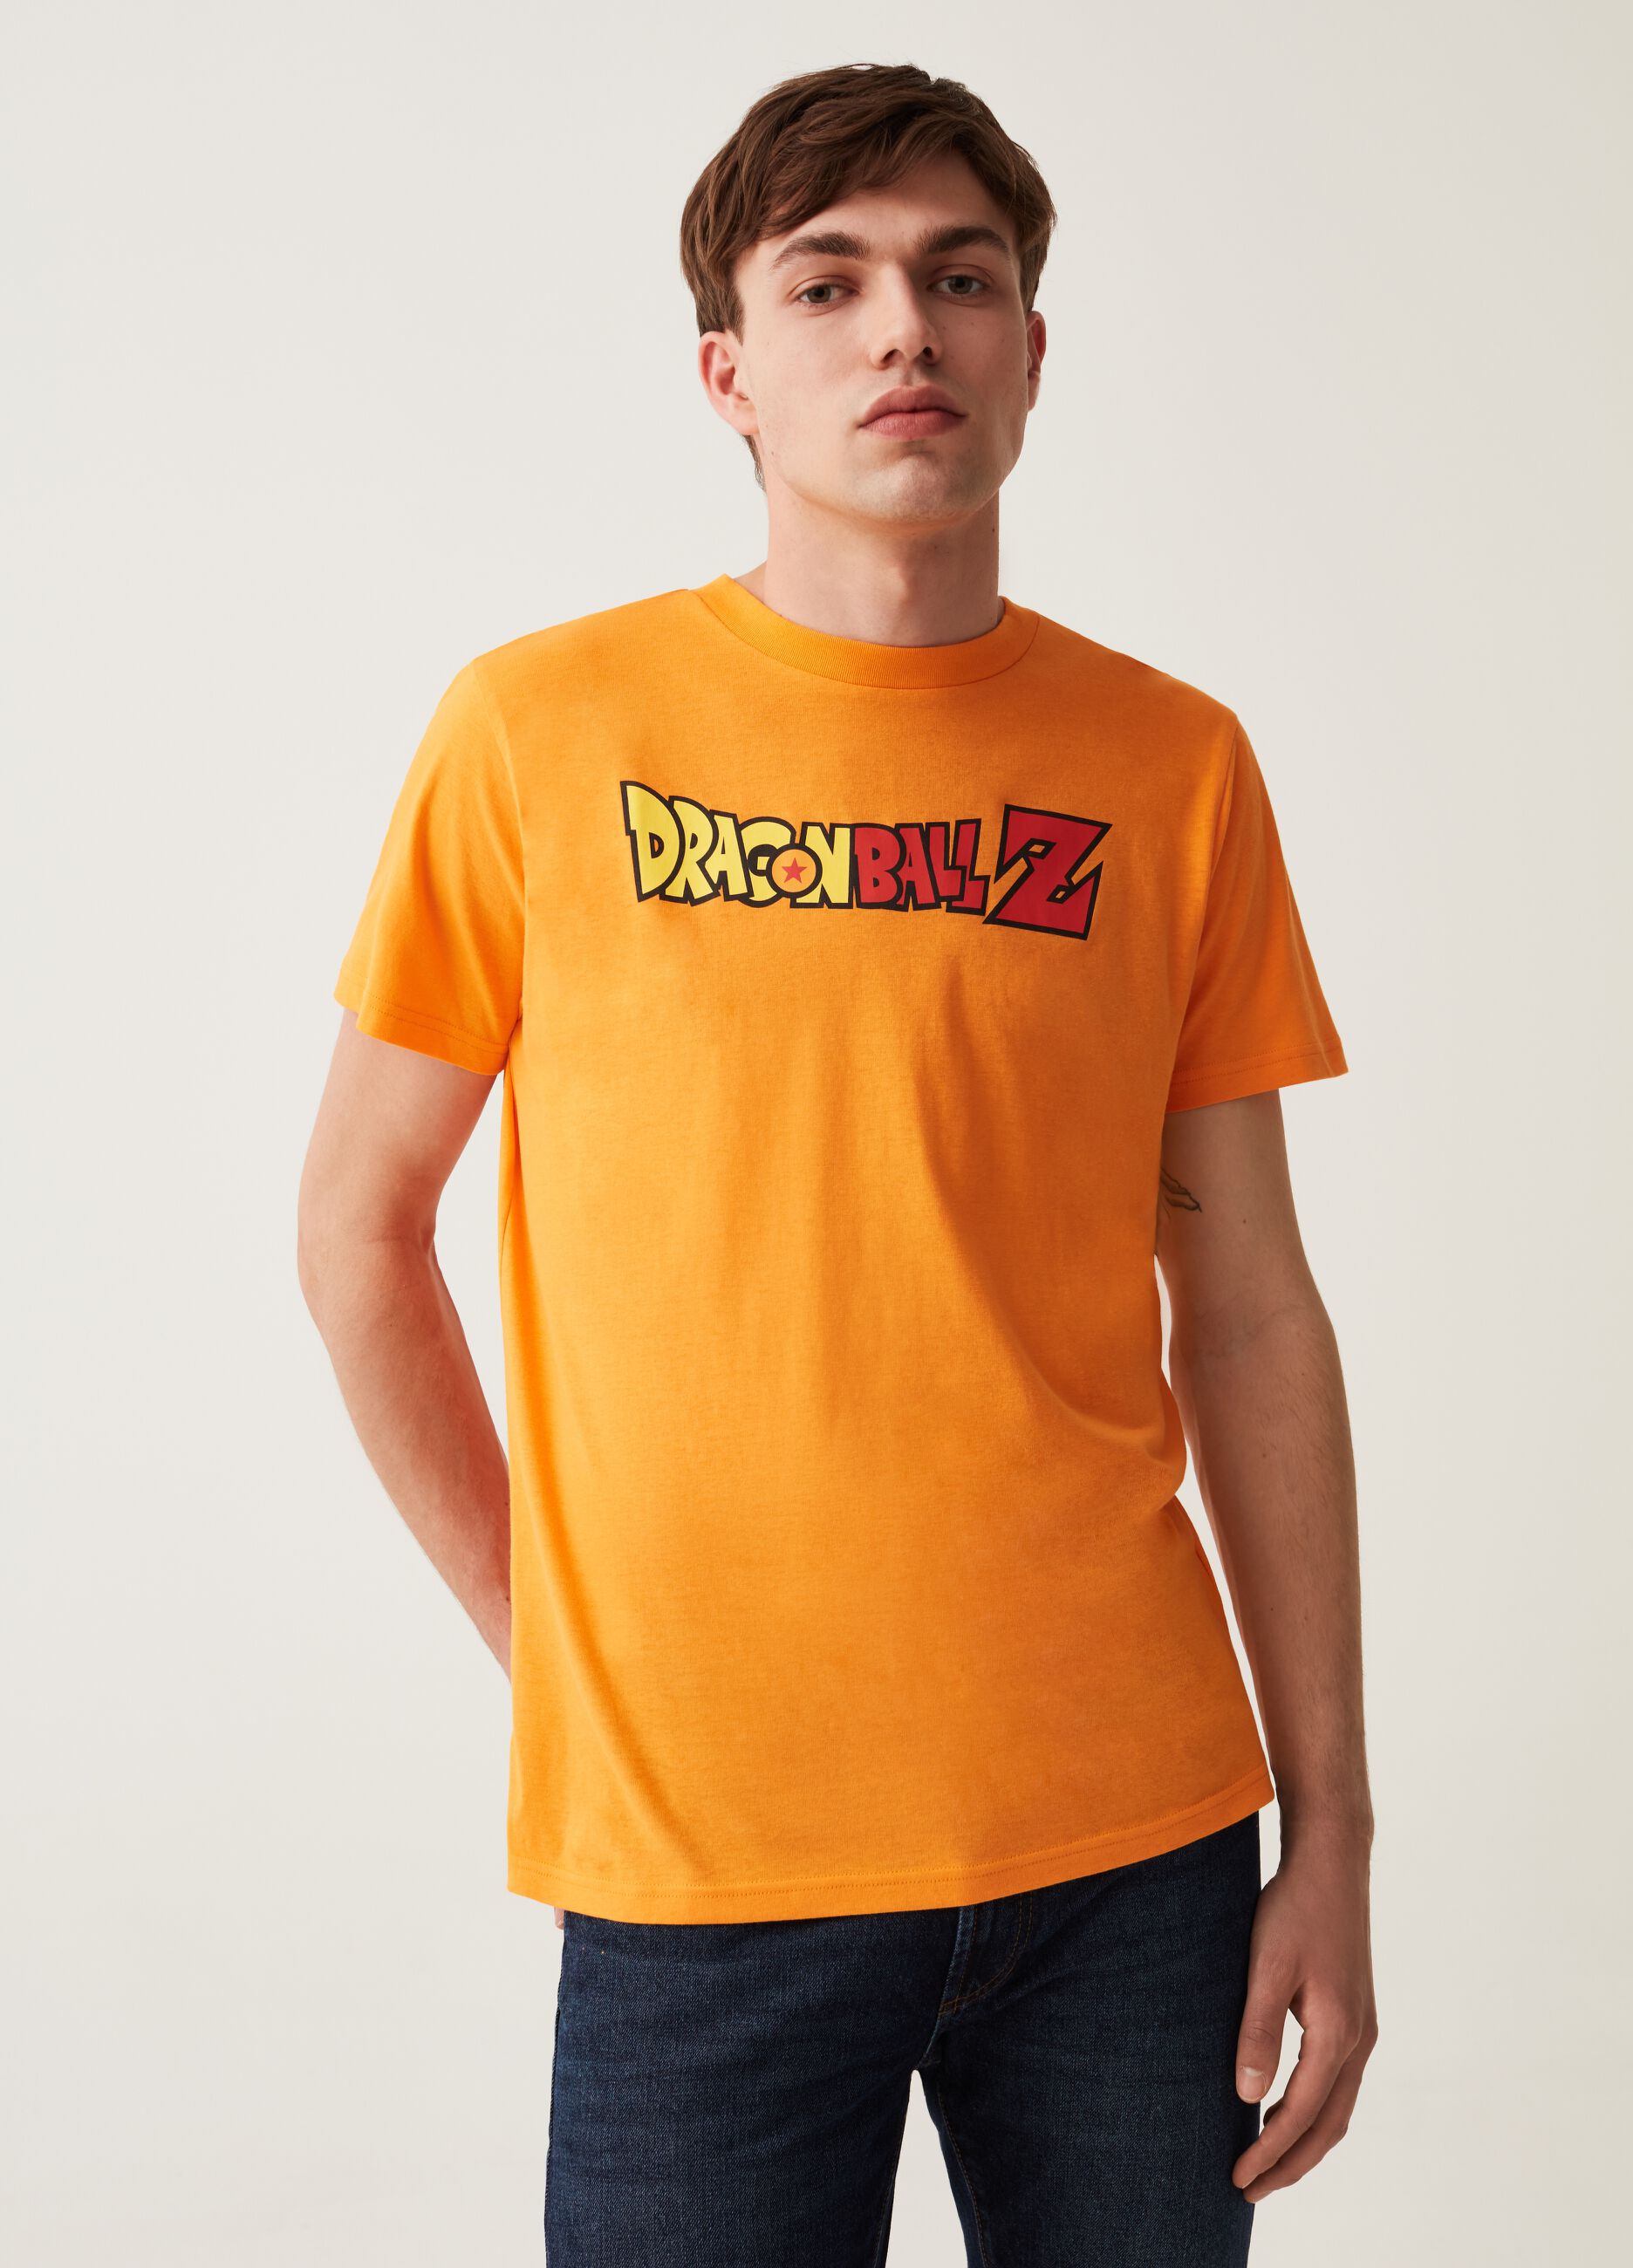 Camiseta estampado personajes Dragon Ball Z